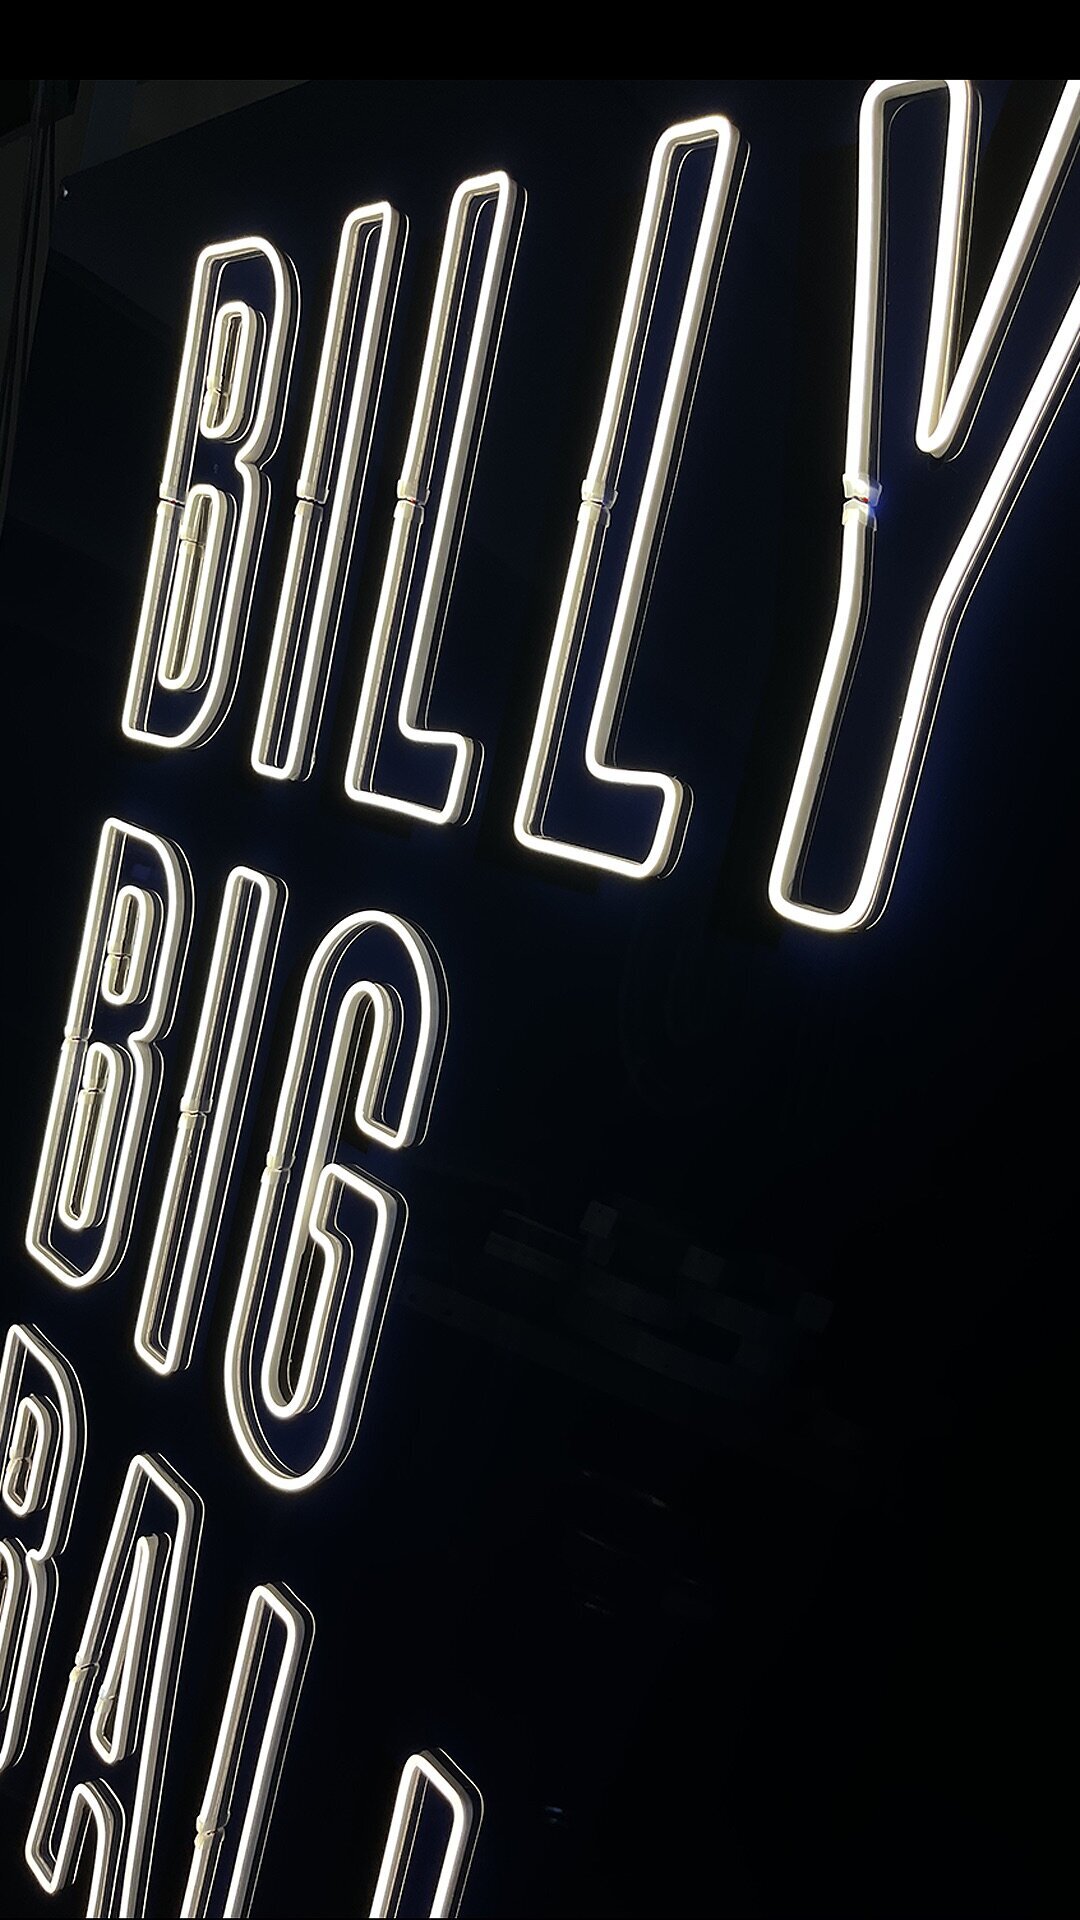 ellis.-signs-custom-warm-white-billy-big-balls-neon-sign-newcastle-gateshead-north-east